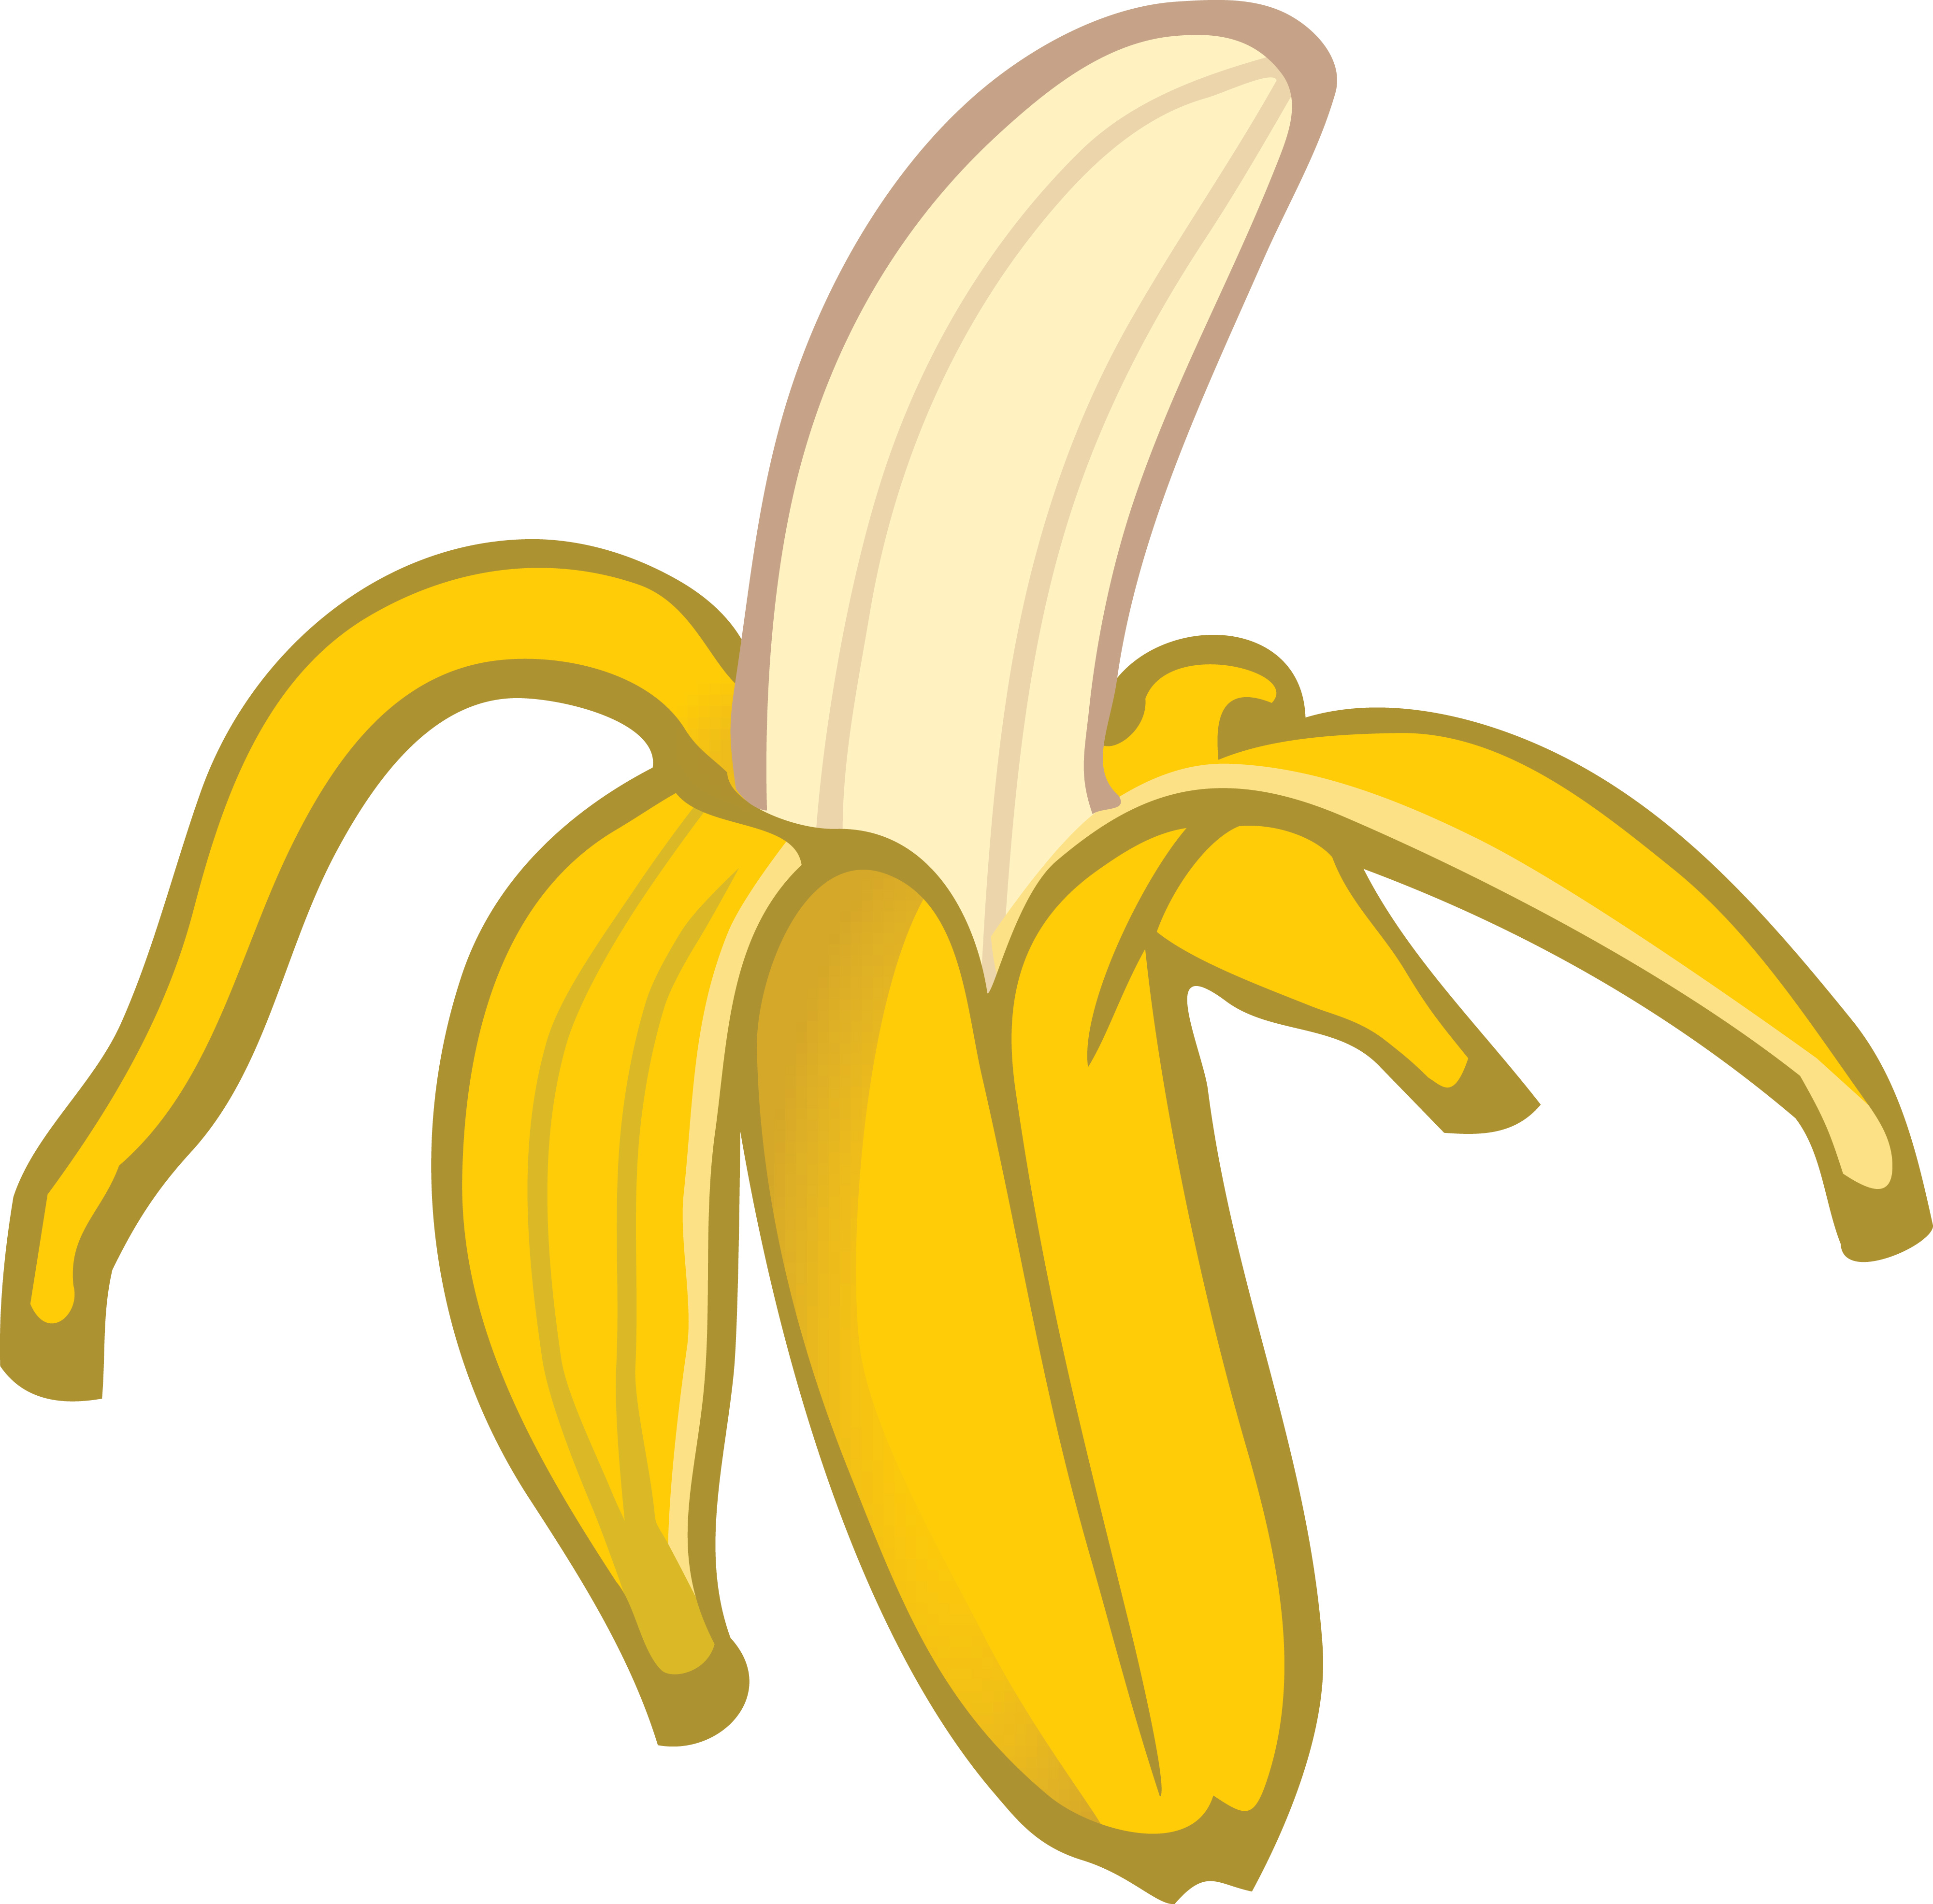 Free Clipart Of A banana.